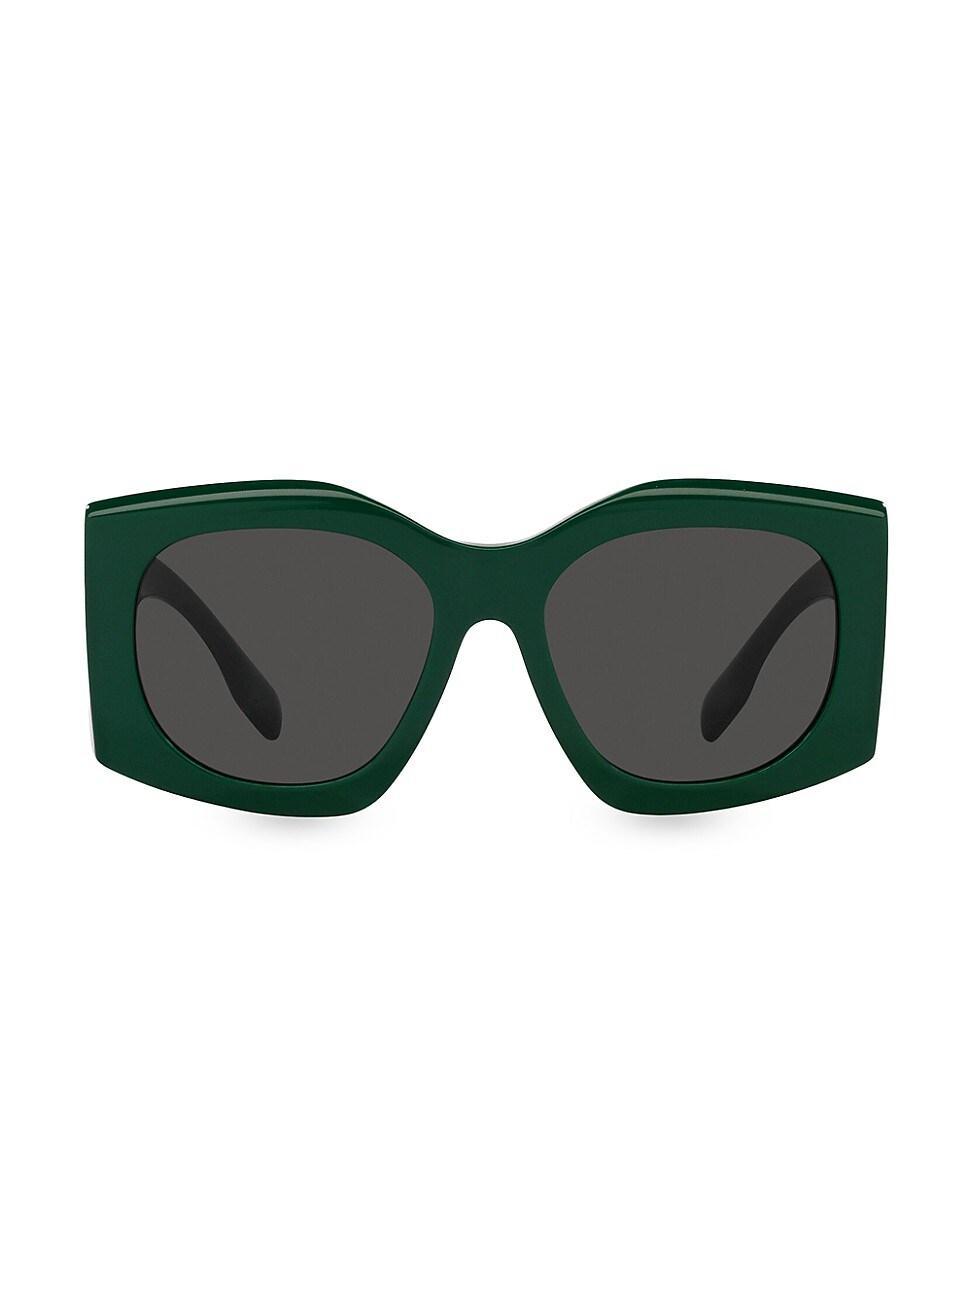 burberry Madeline 55mm Irregular Sunglasses Product Image